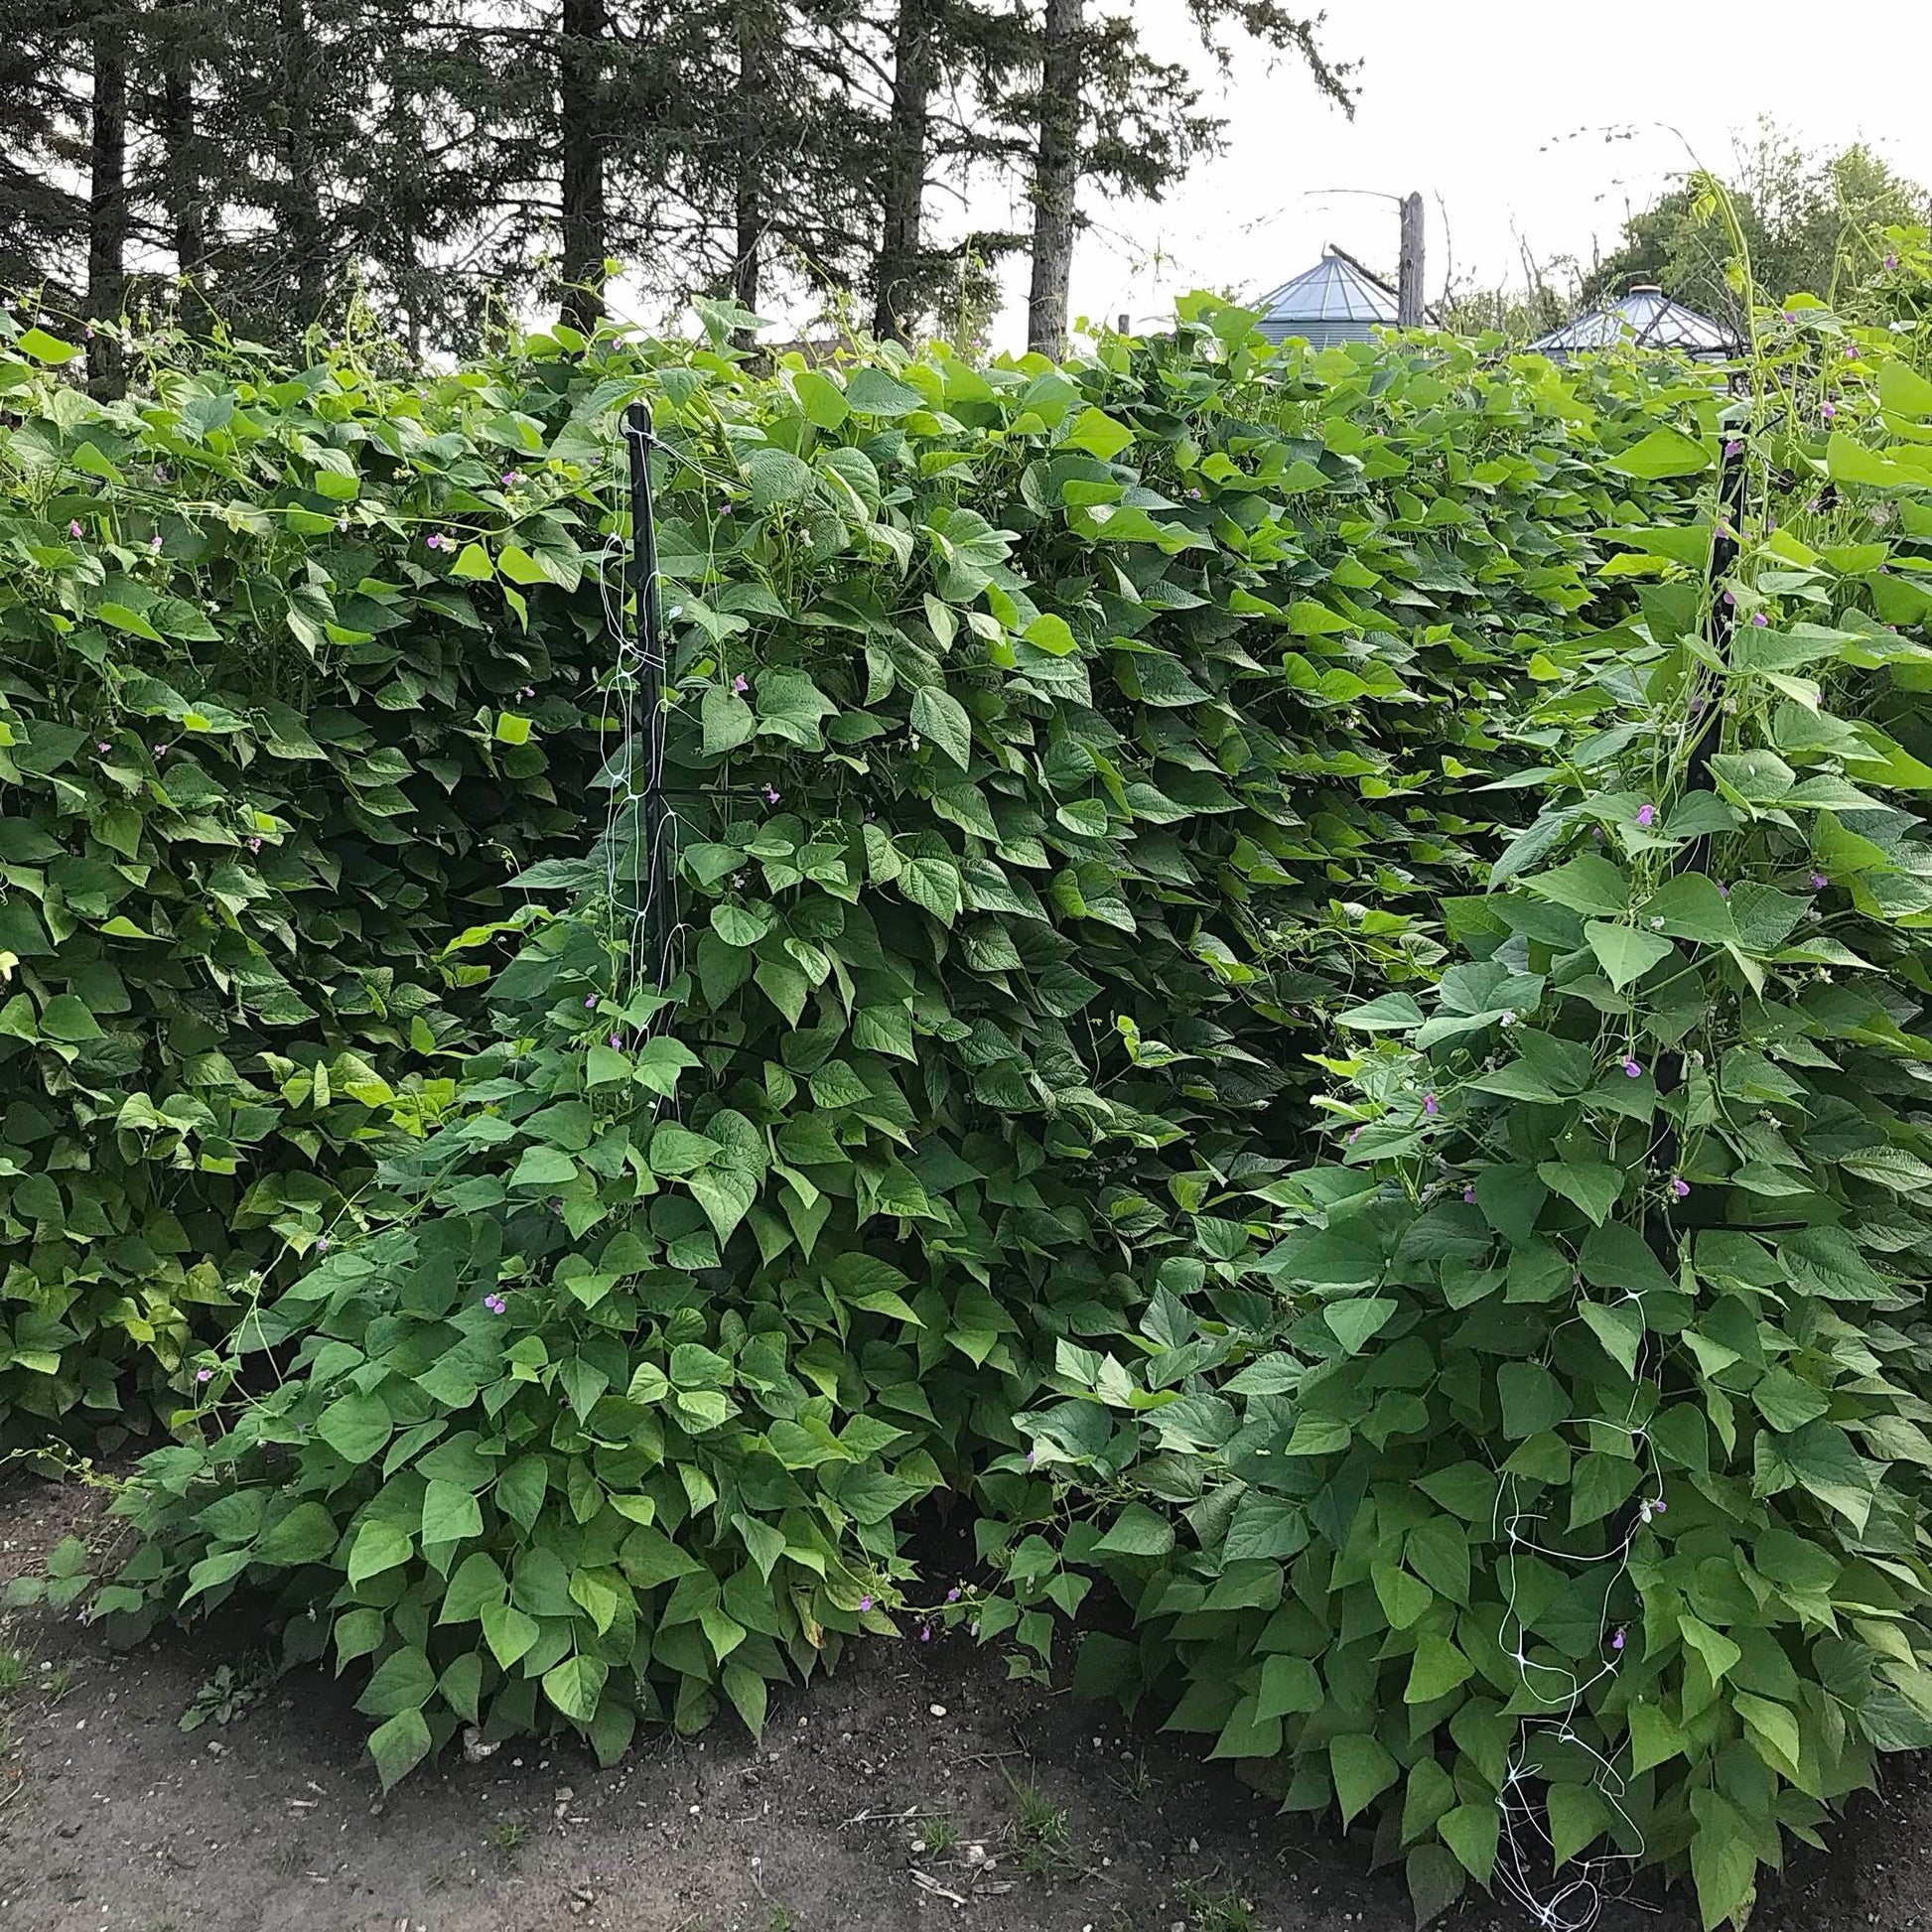 Bushy pole bean plants on three rows of trellis.